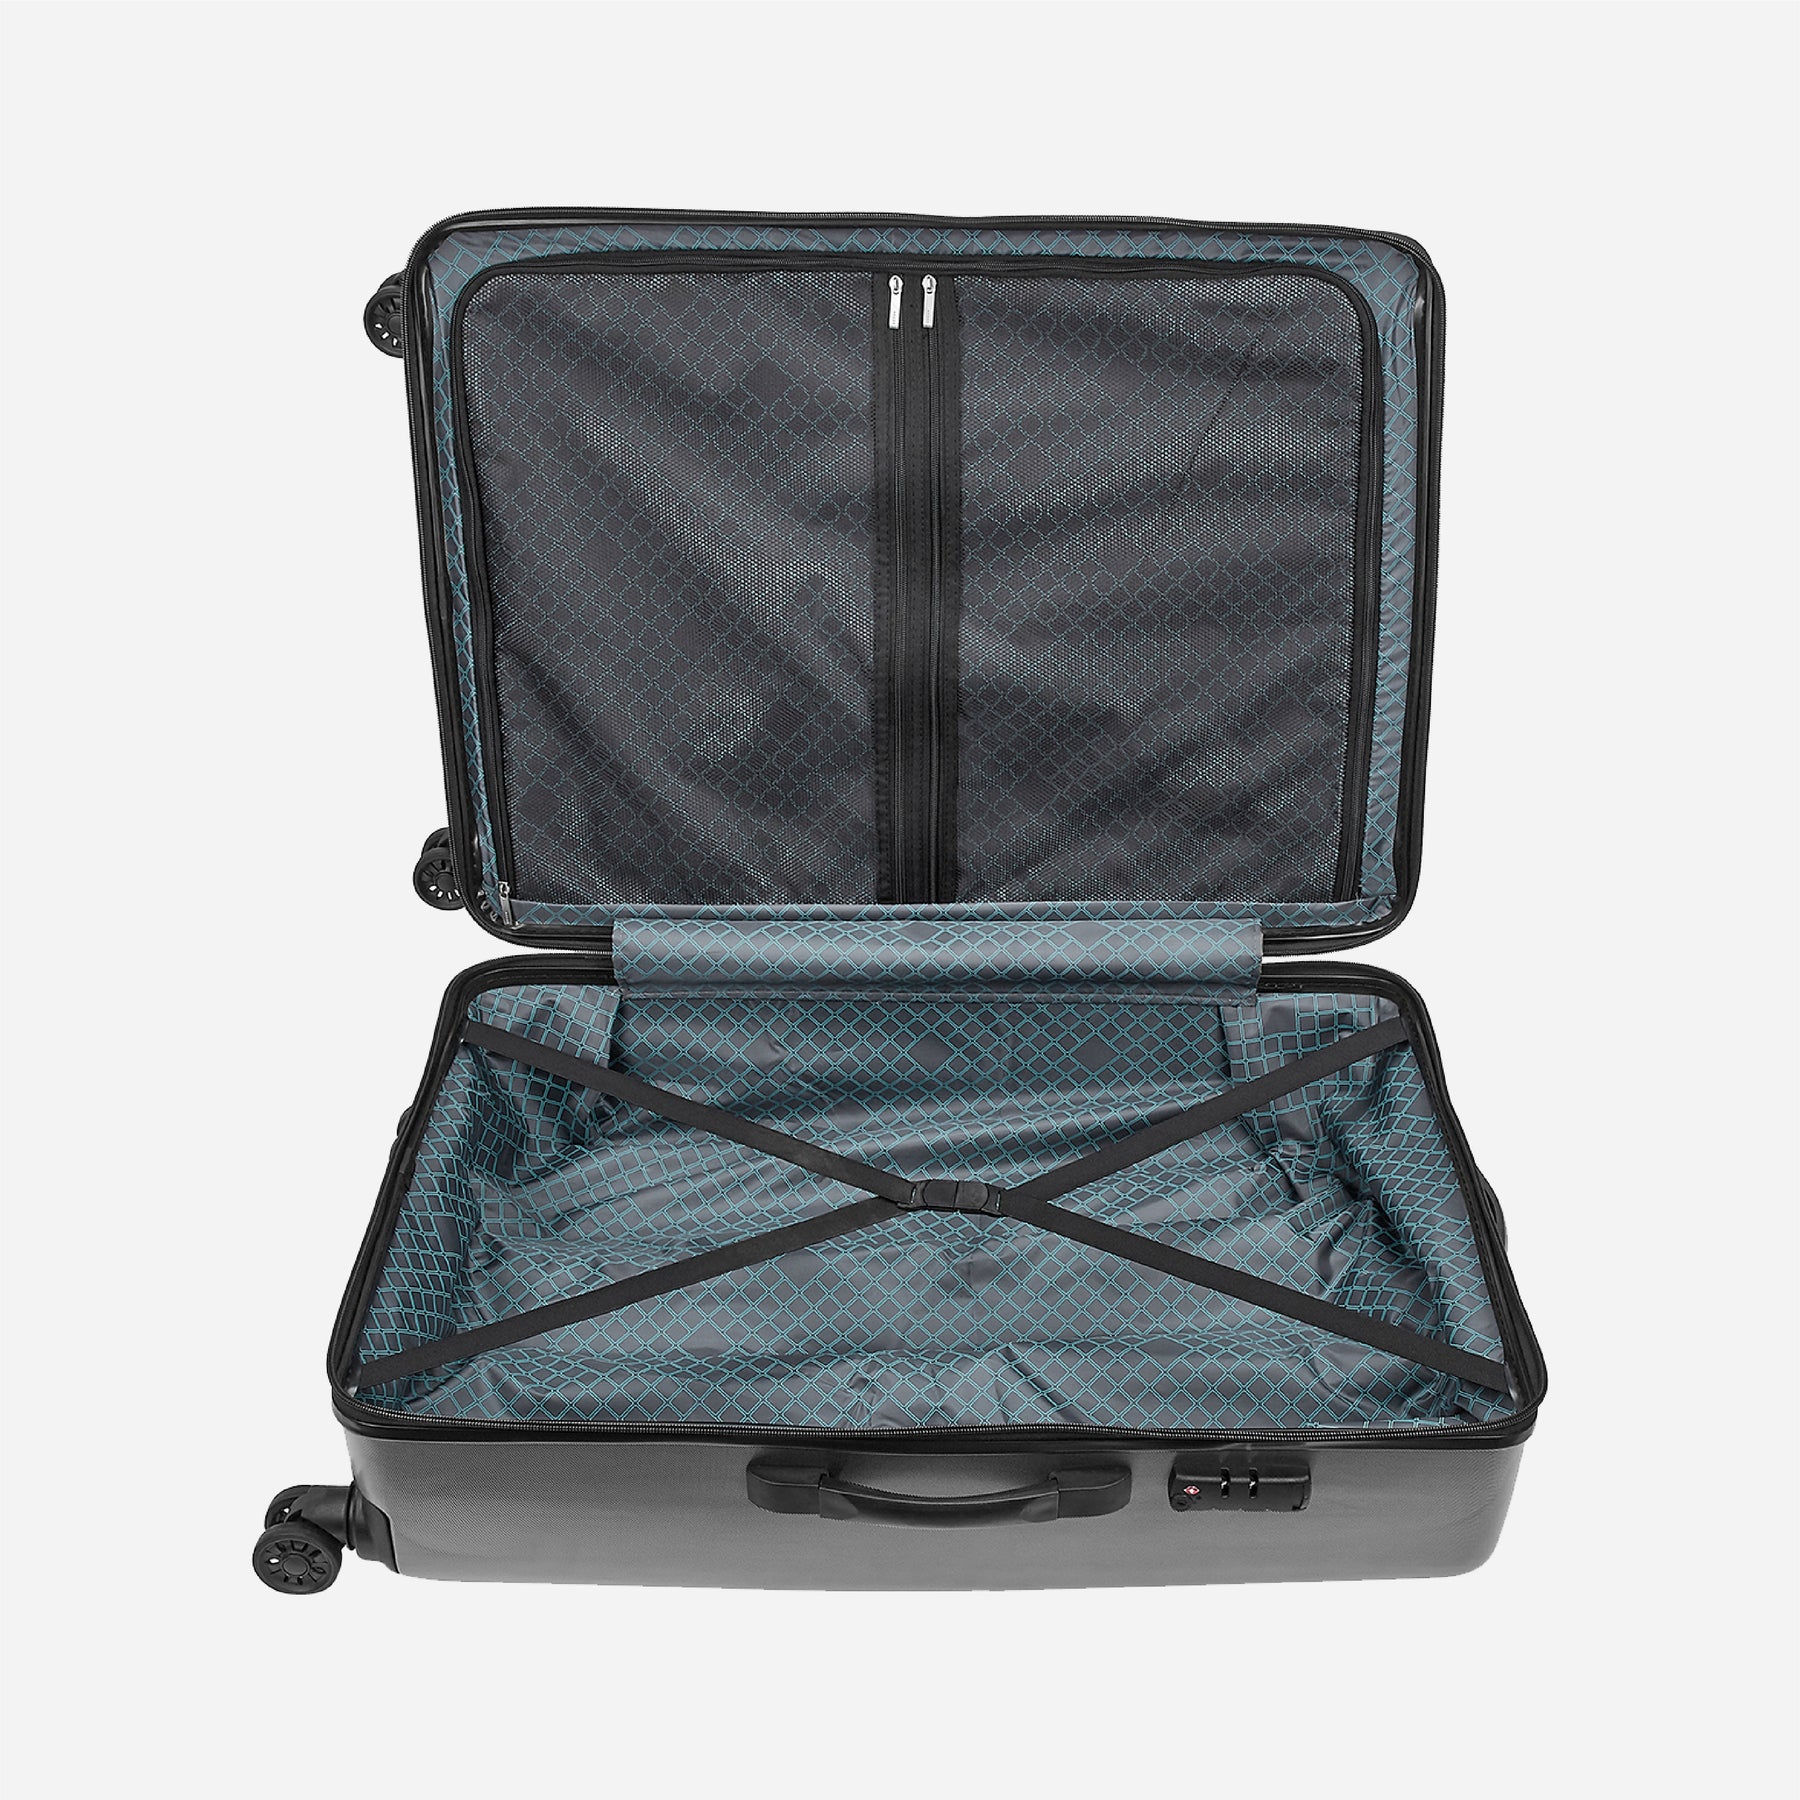 Safari Vivid Plus 65 cm Hard Luggage Bag